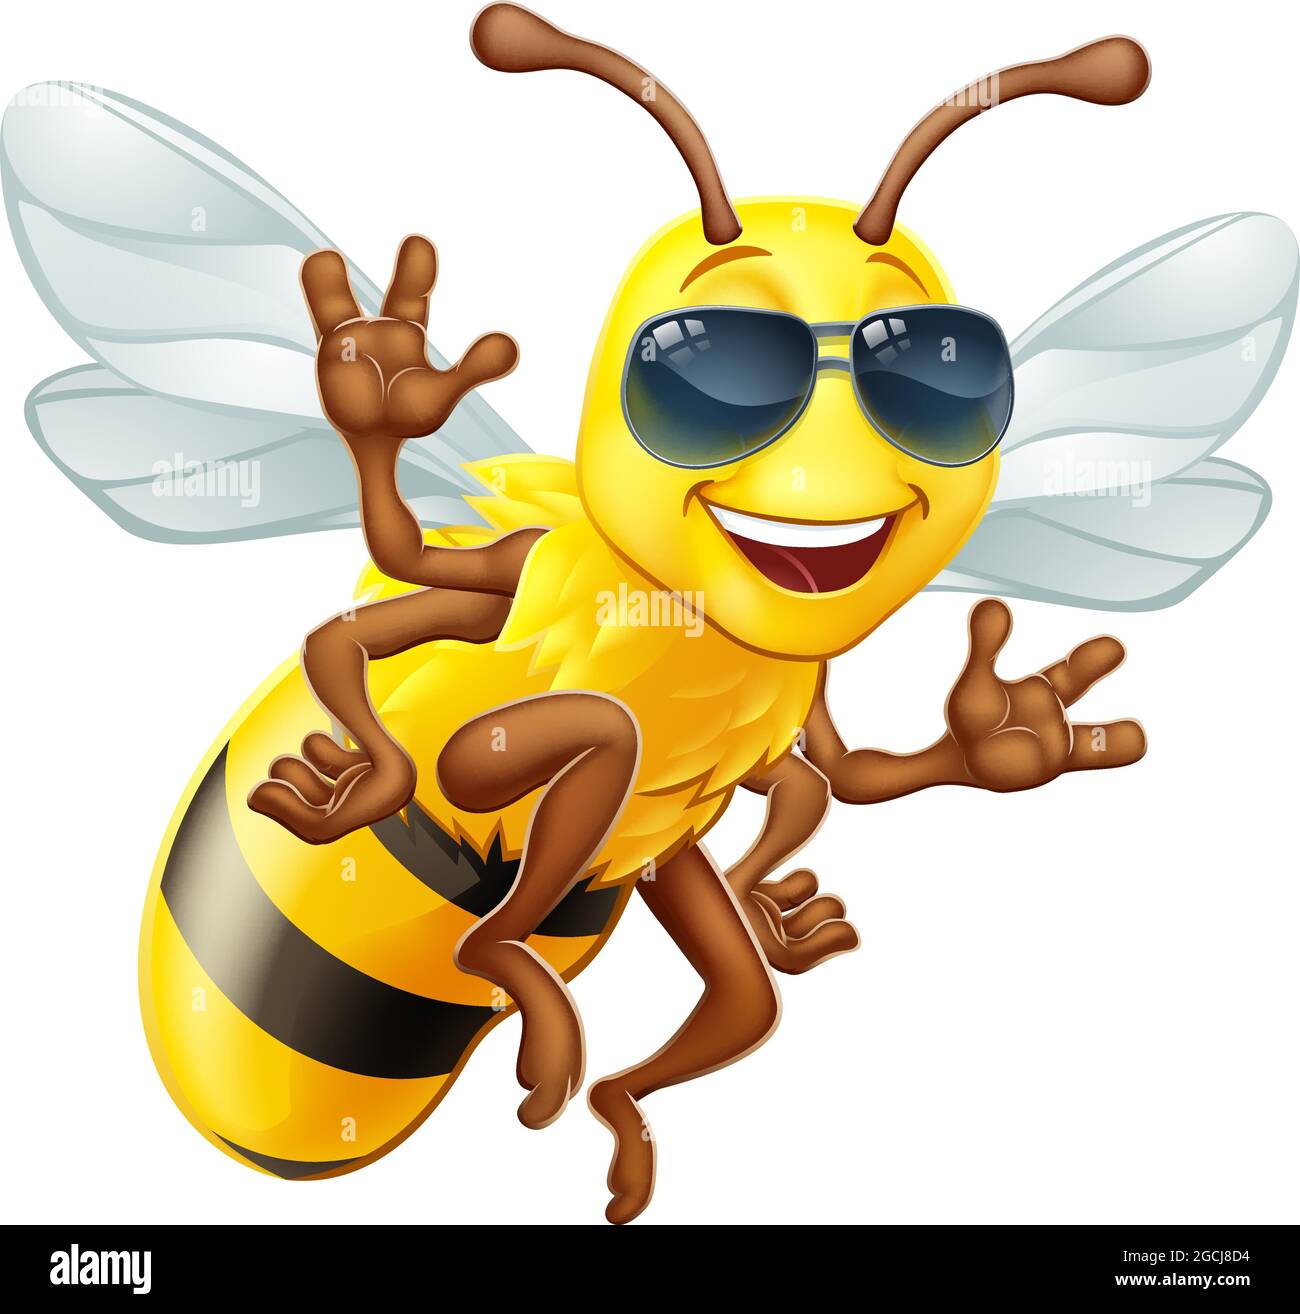 Cool Honey Bumble Bee in Shades Cartoon Character Stock Vector